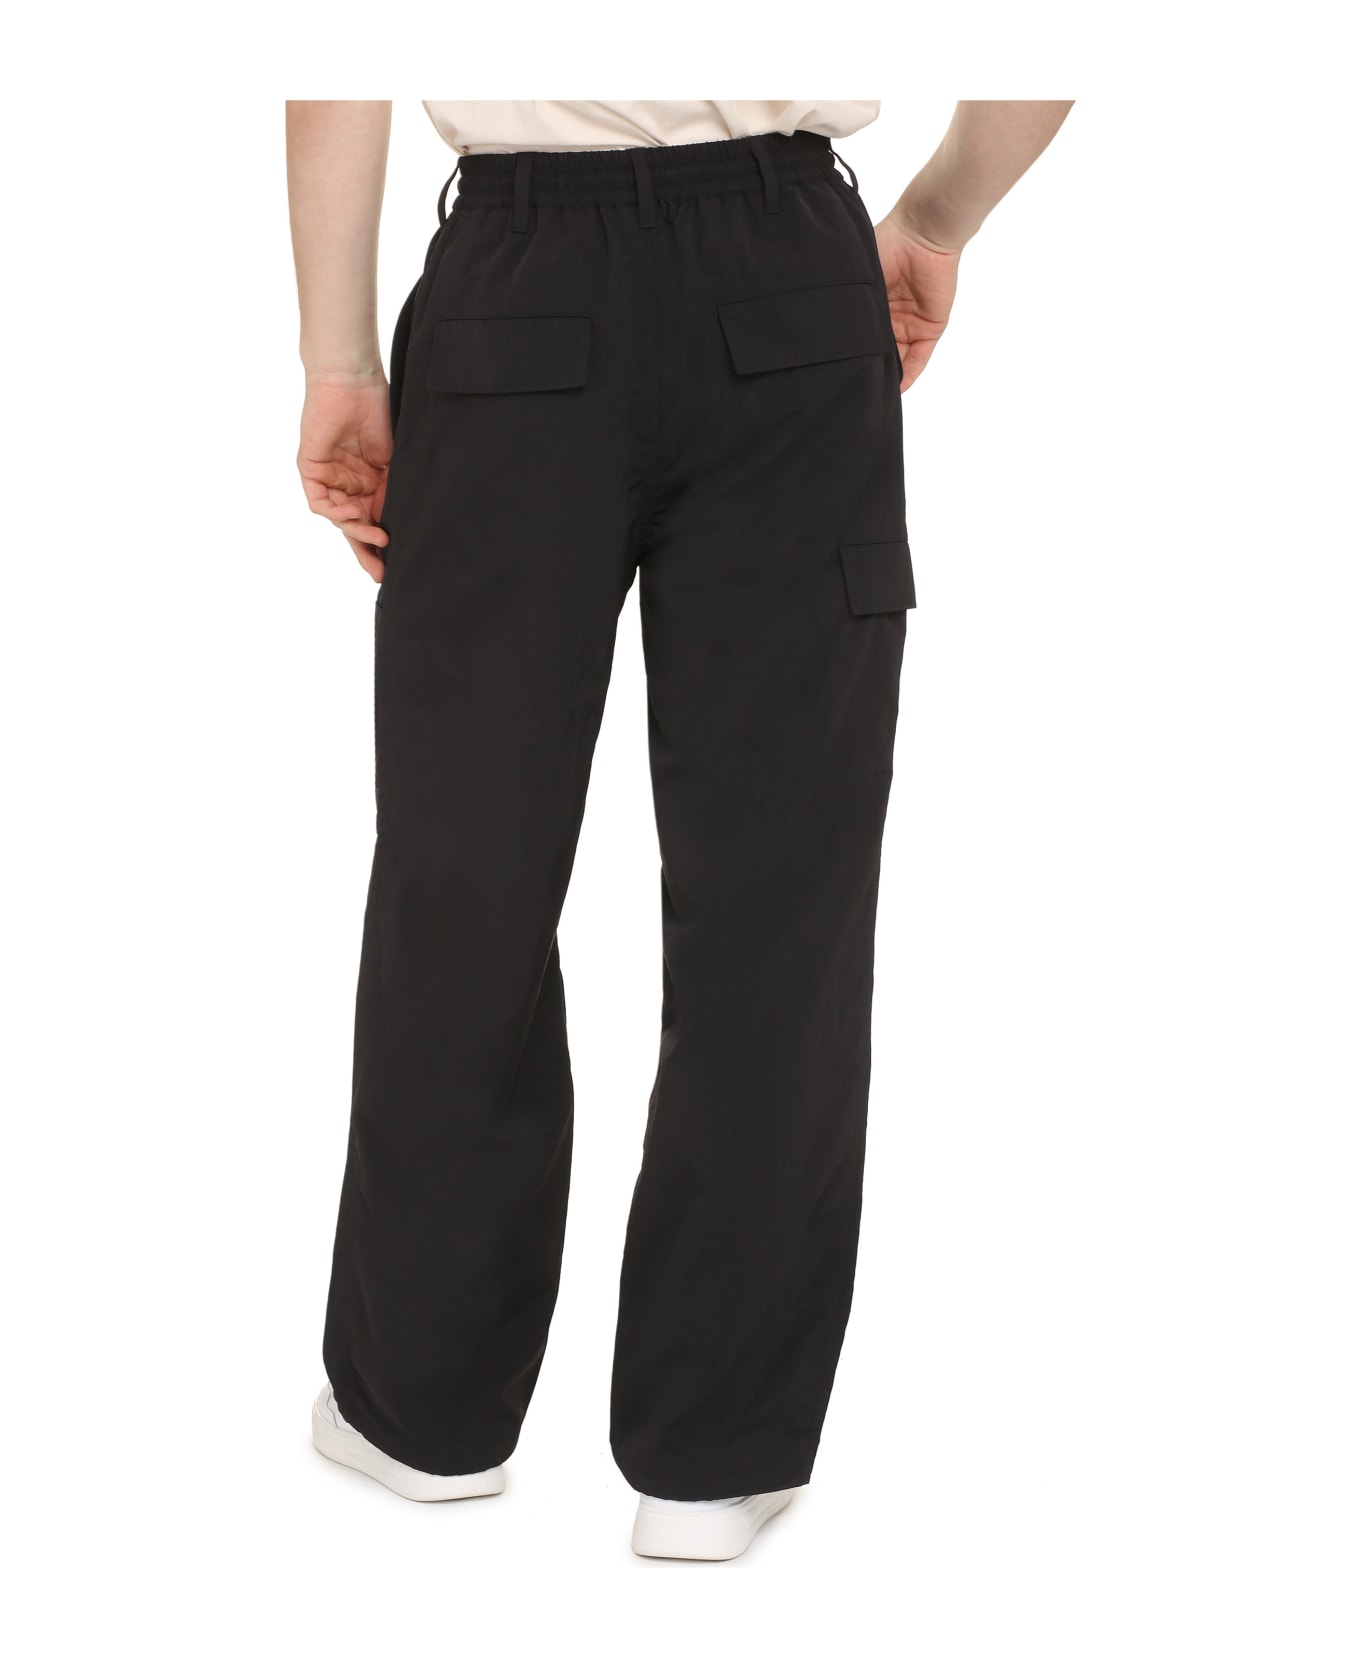 Y-3 Technical Fabric Pants - black ボトムス